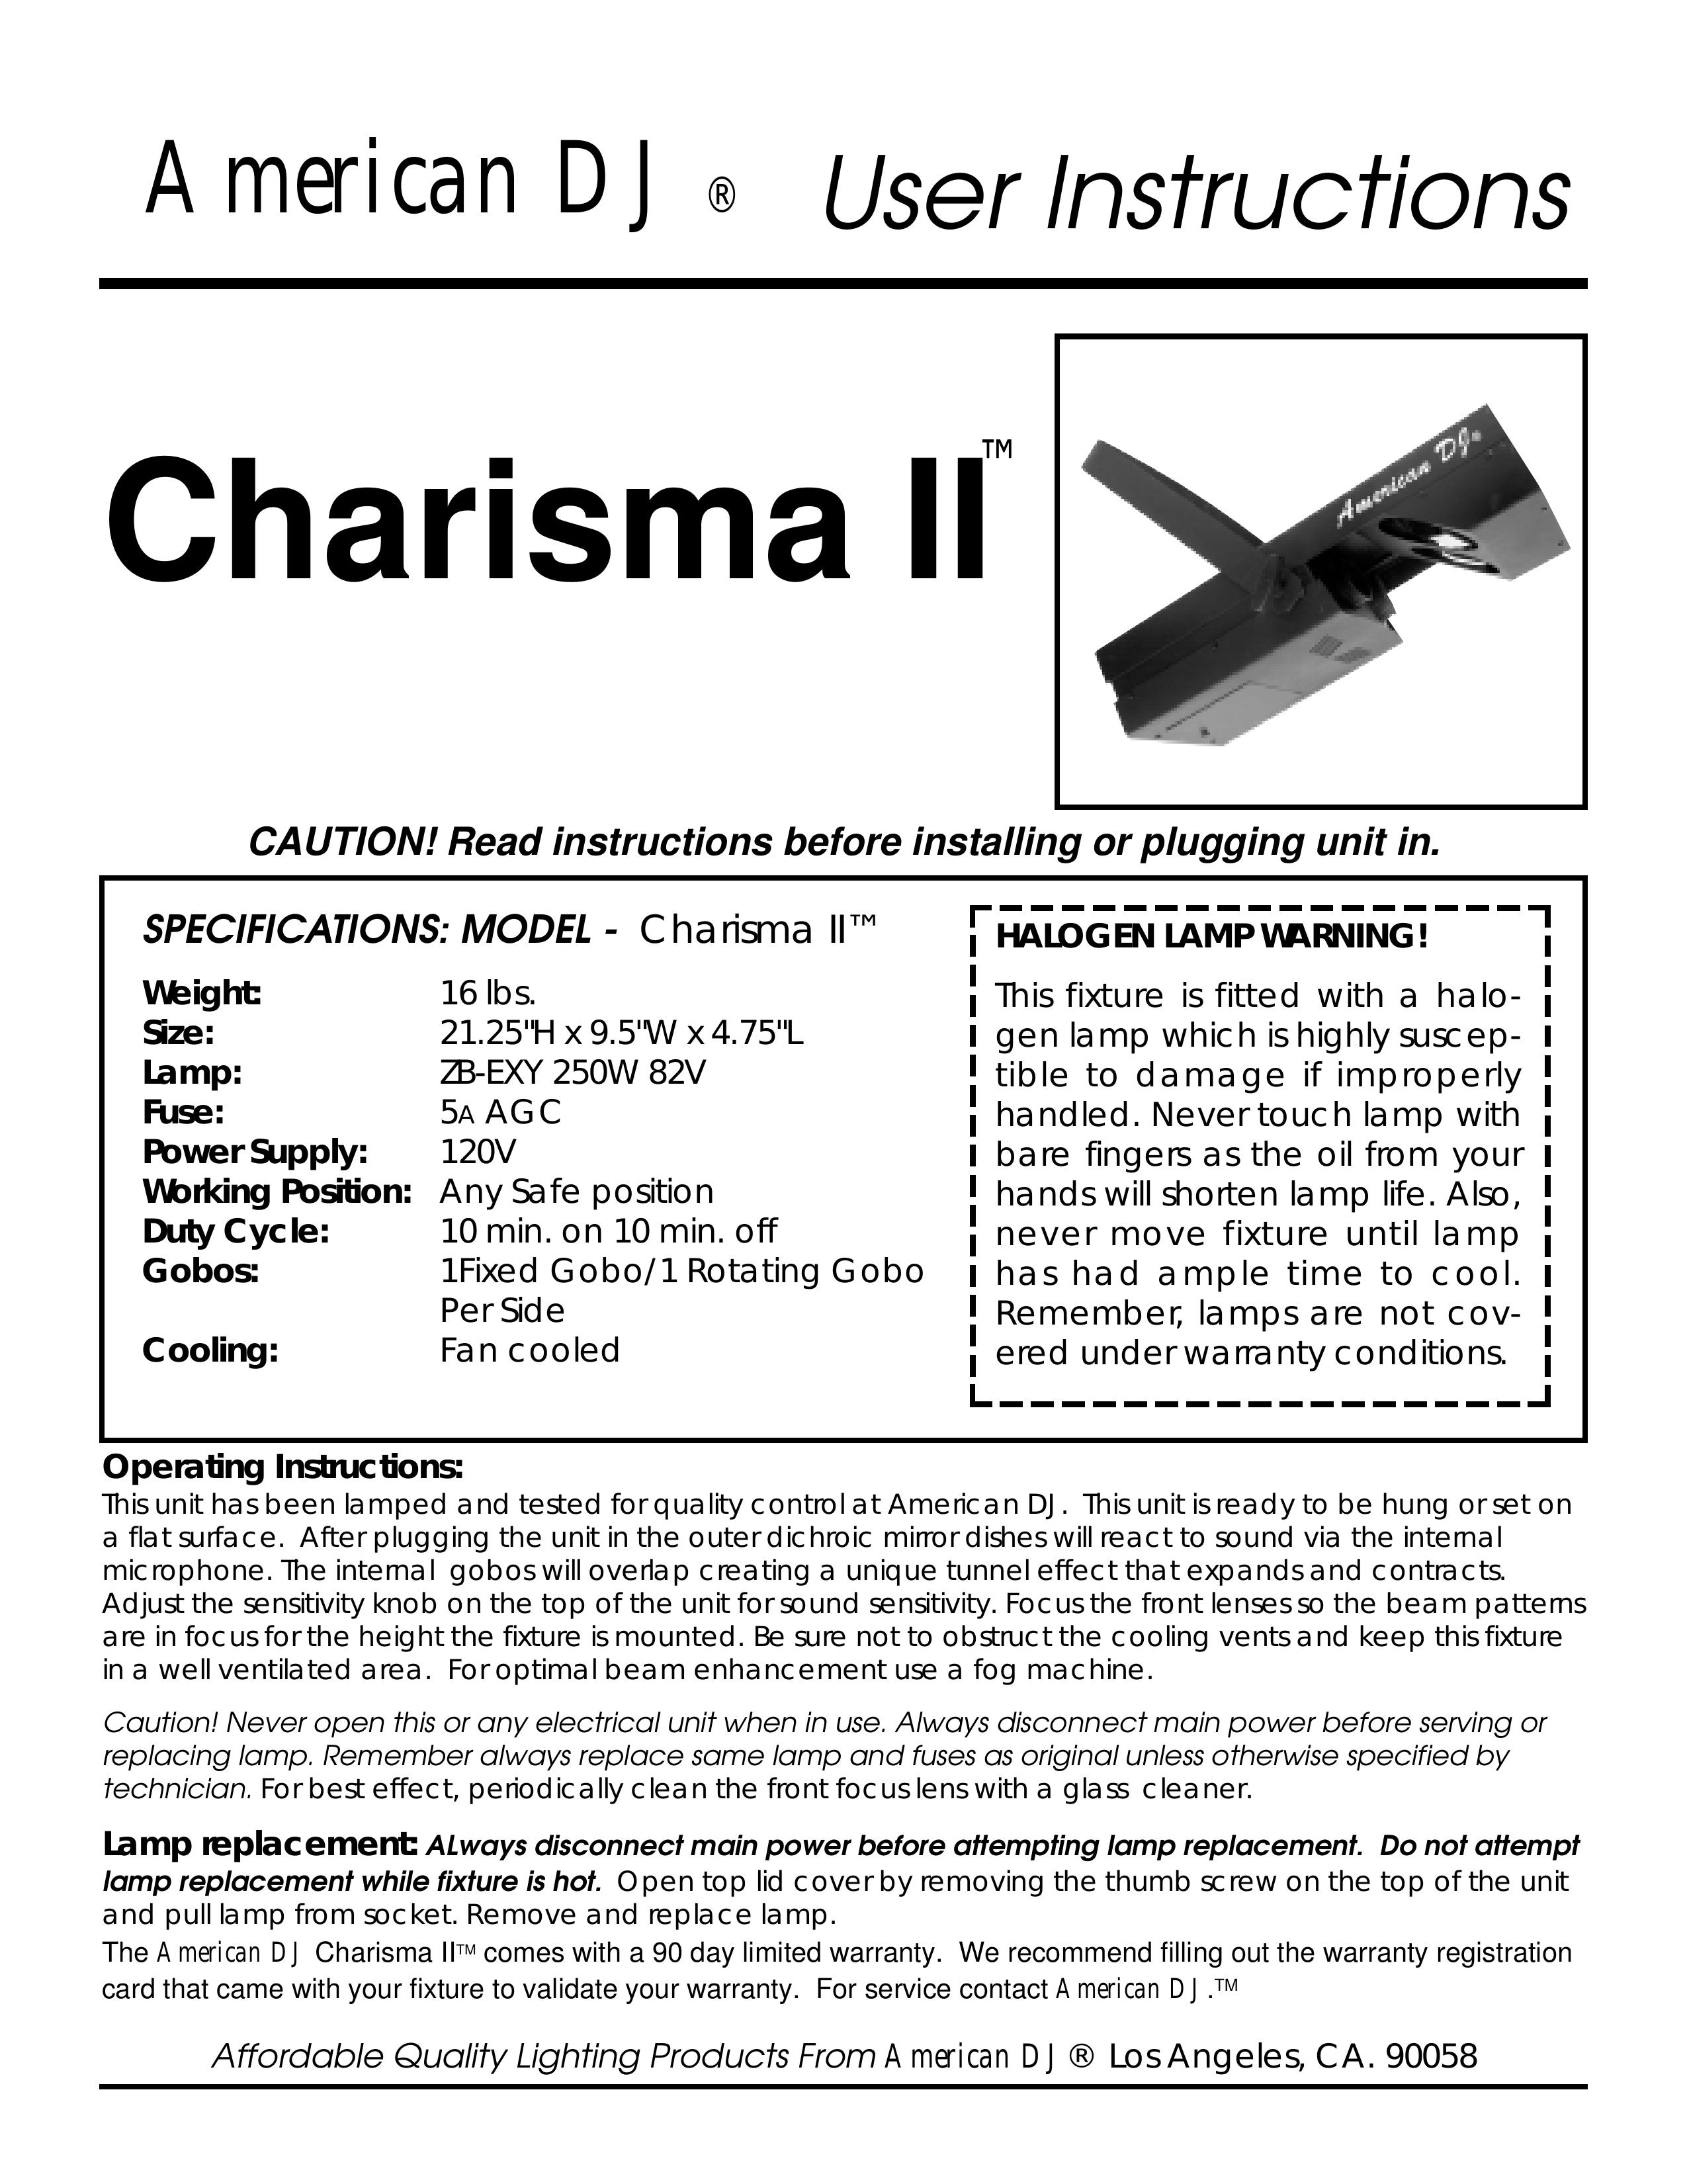 American DJ Charisma DJ Equipment User Manual (Page 1)